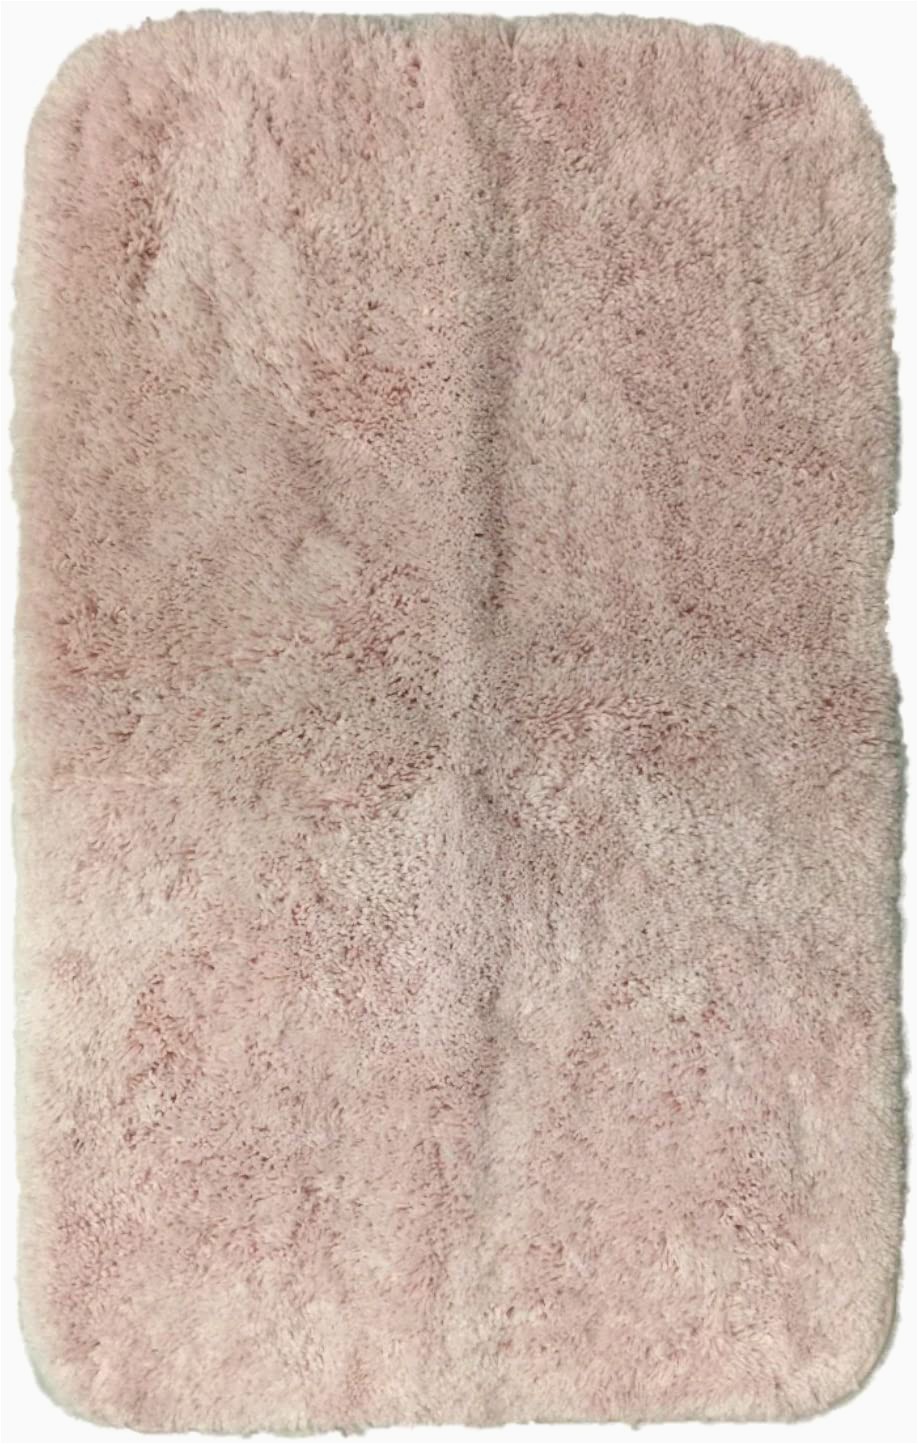 Sonoma Bath Rugs at Kohls Amazon sonoma Ultimate Light Blush Pink Skid Resistant